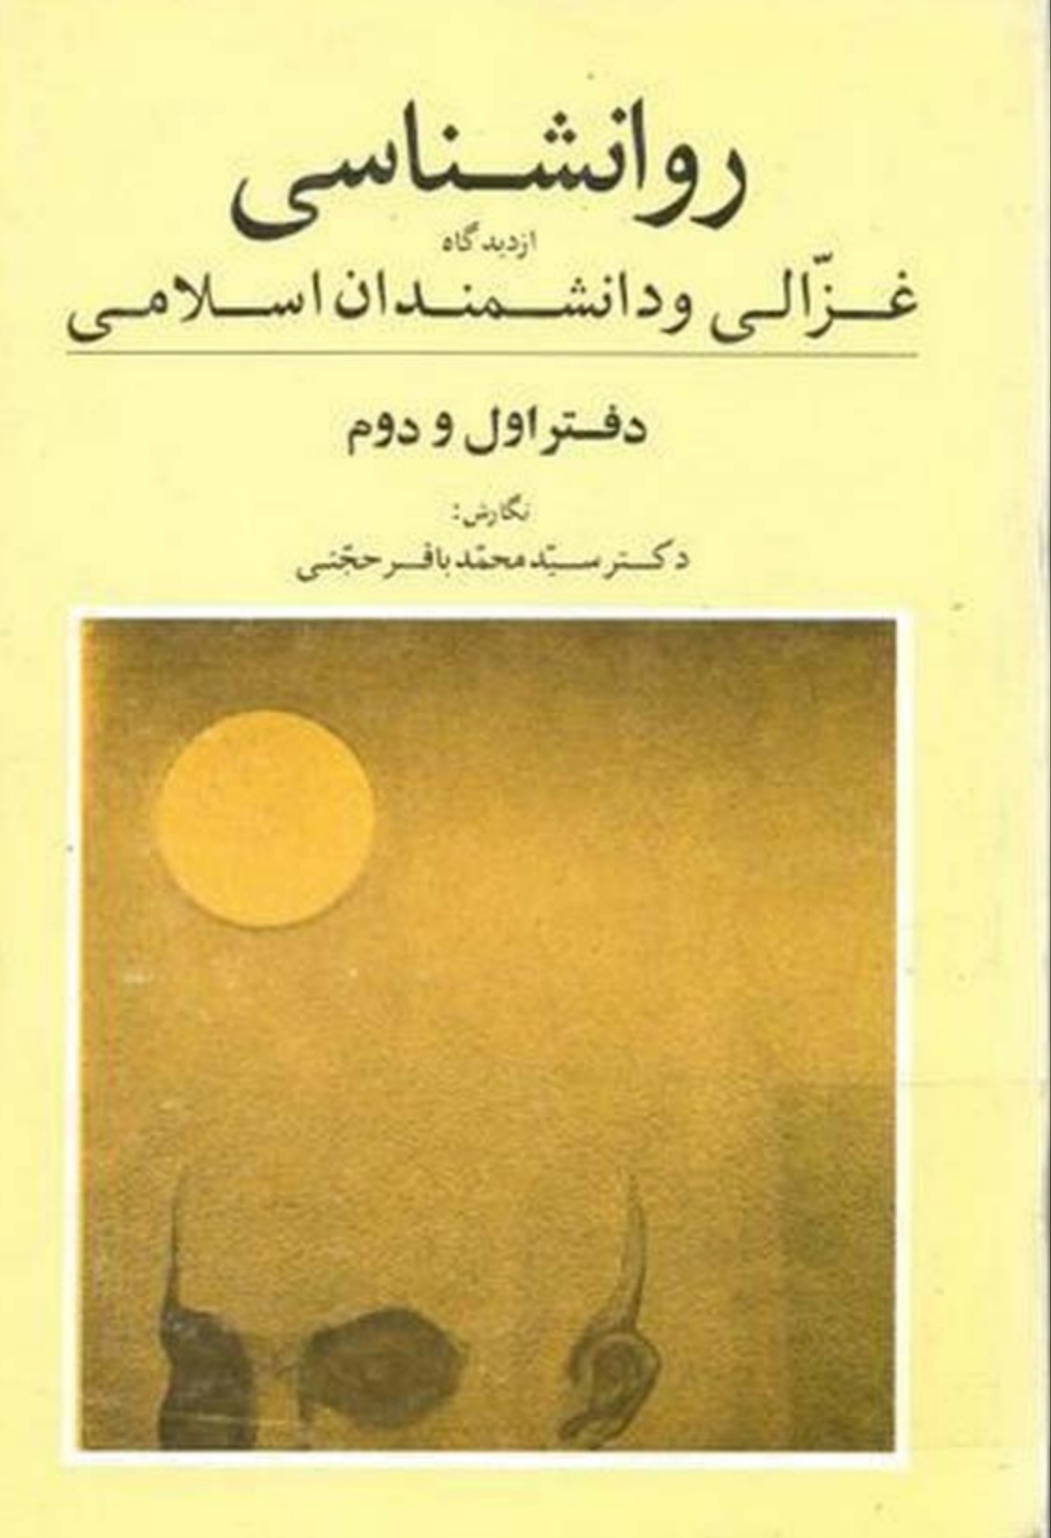 PDFکتاب روانشناسی از دیدگاه غزالی و دانشمندان اسلامی تالیف محمد باقر حجتی